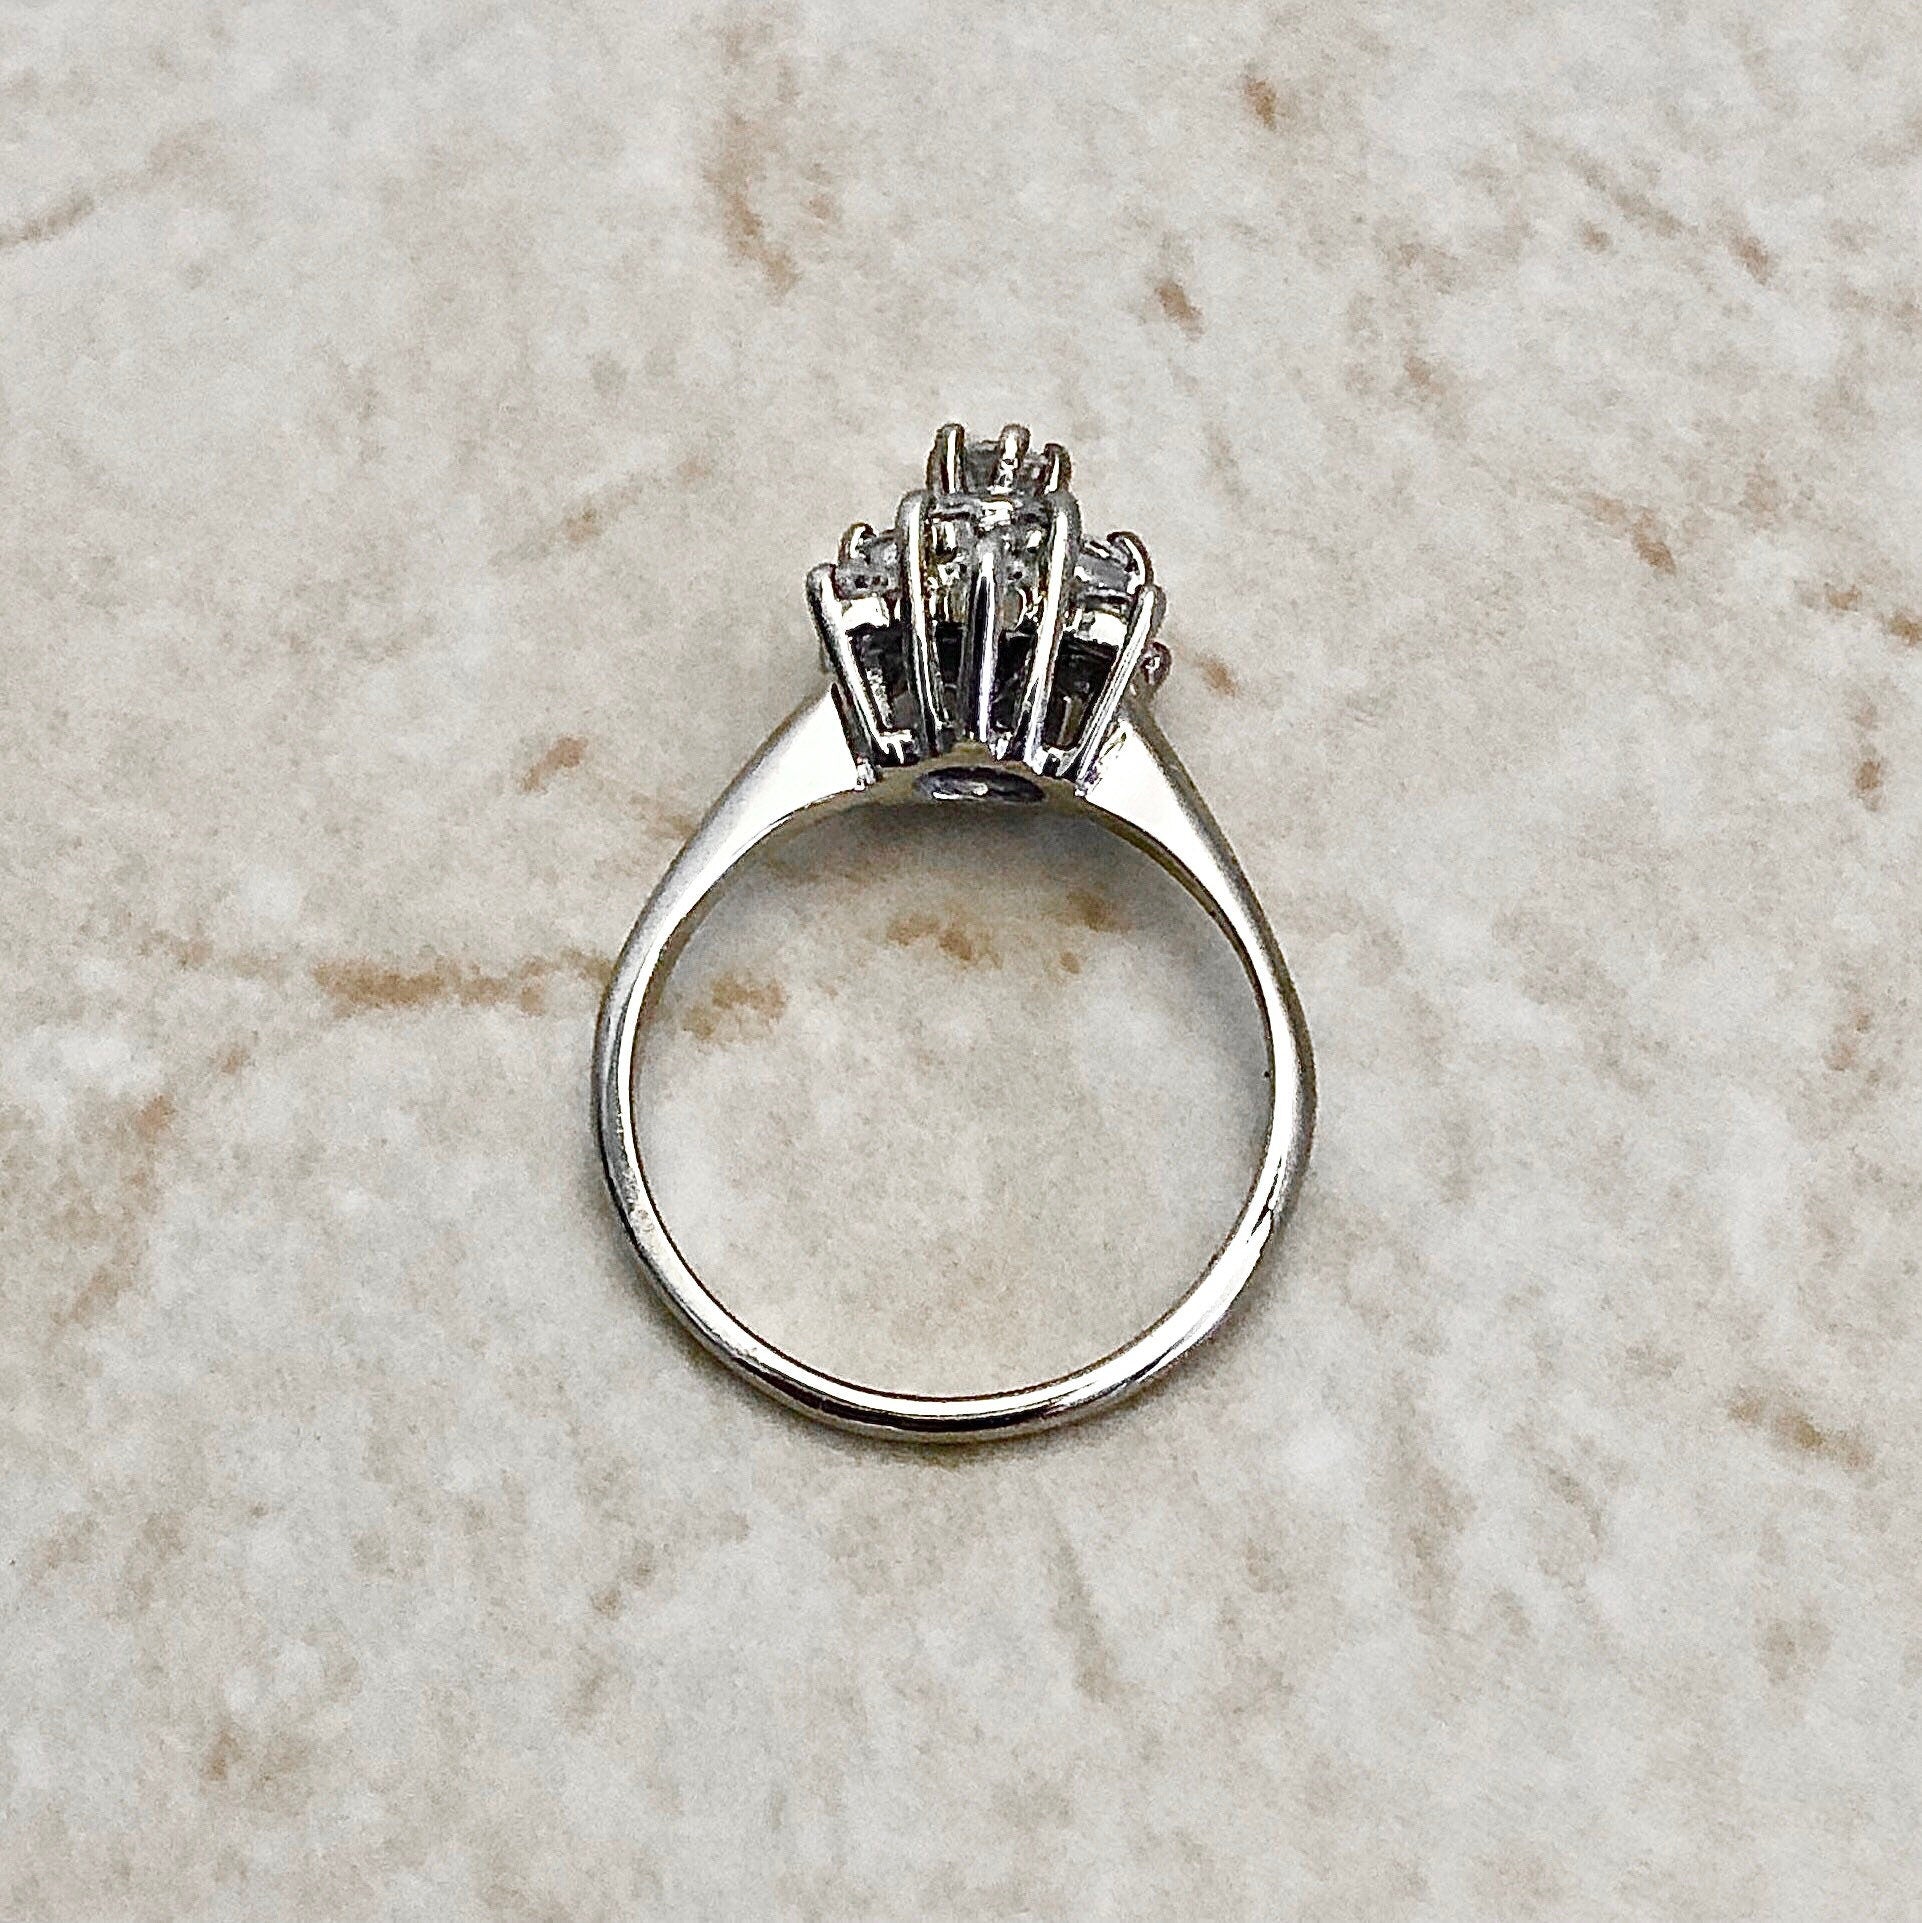 14K Snowflake Cluster Diamond Ring - White Gold - Diamond Cocktail Ring - Size 7 US - Birthday Gift For Her - Bridal Ring - Christmas Ring